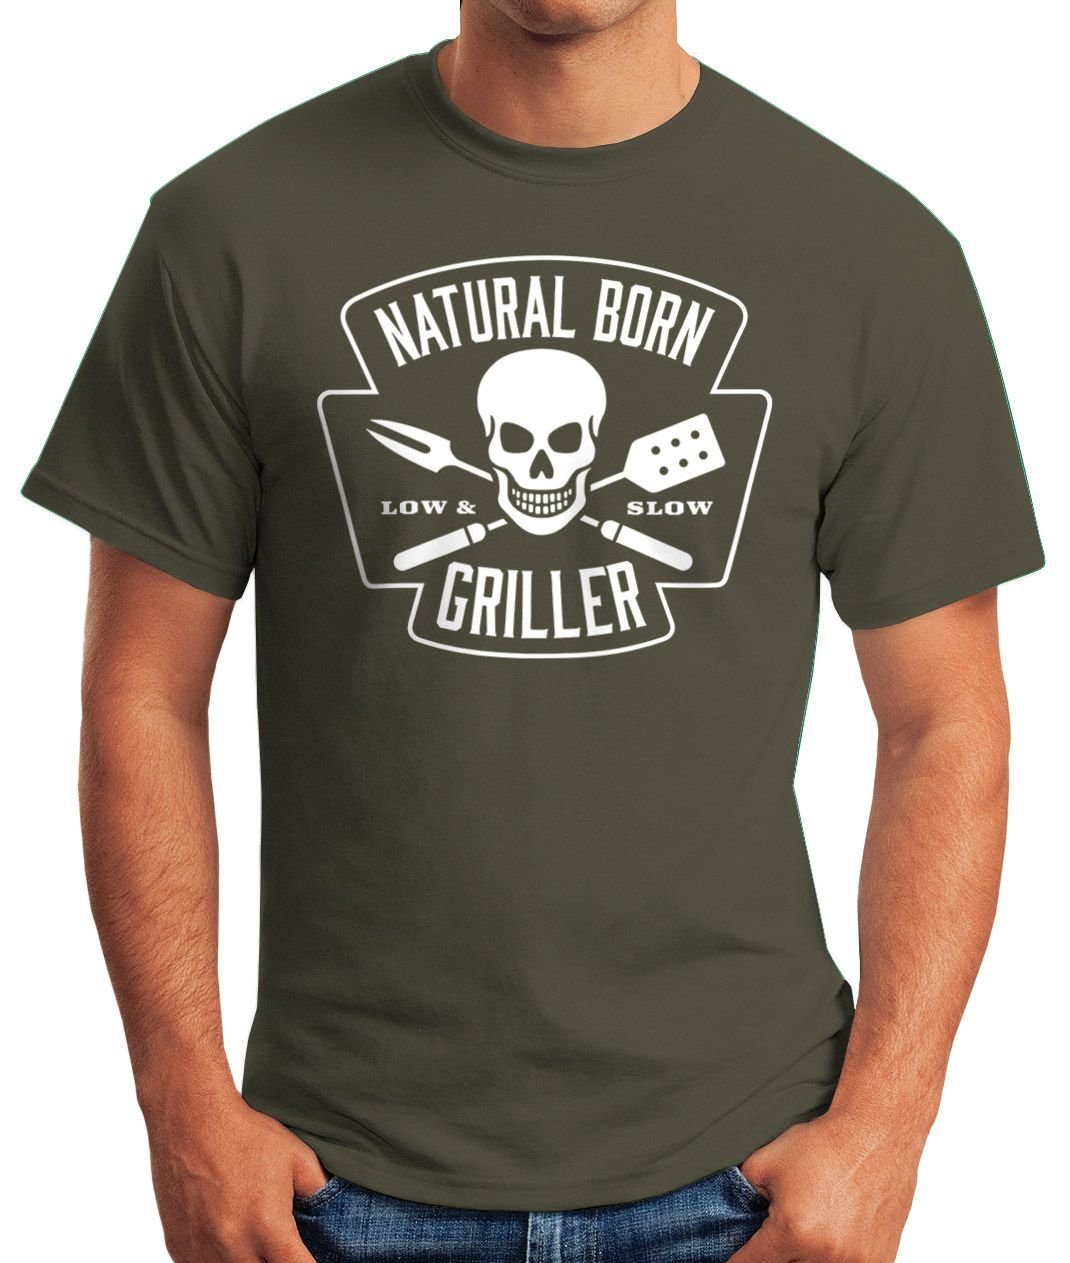 Food Print Moonworks® T-Shirt mit Tee Natural Born Sommer Griller Print-Shirt BBQ MoonWorks Herren Fun-Shirt grün Grillen Barbecue